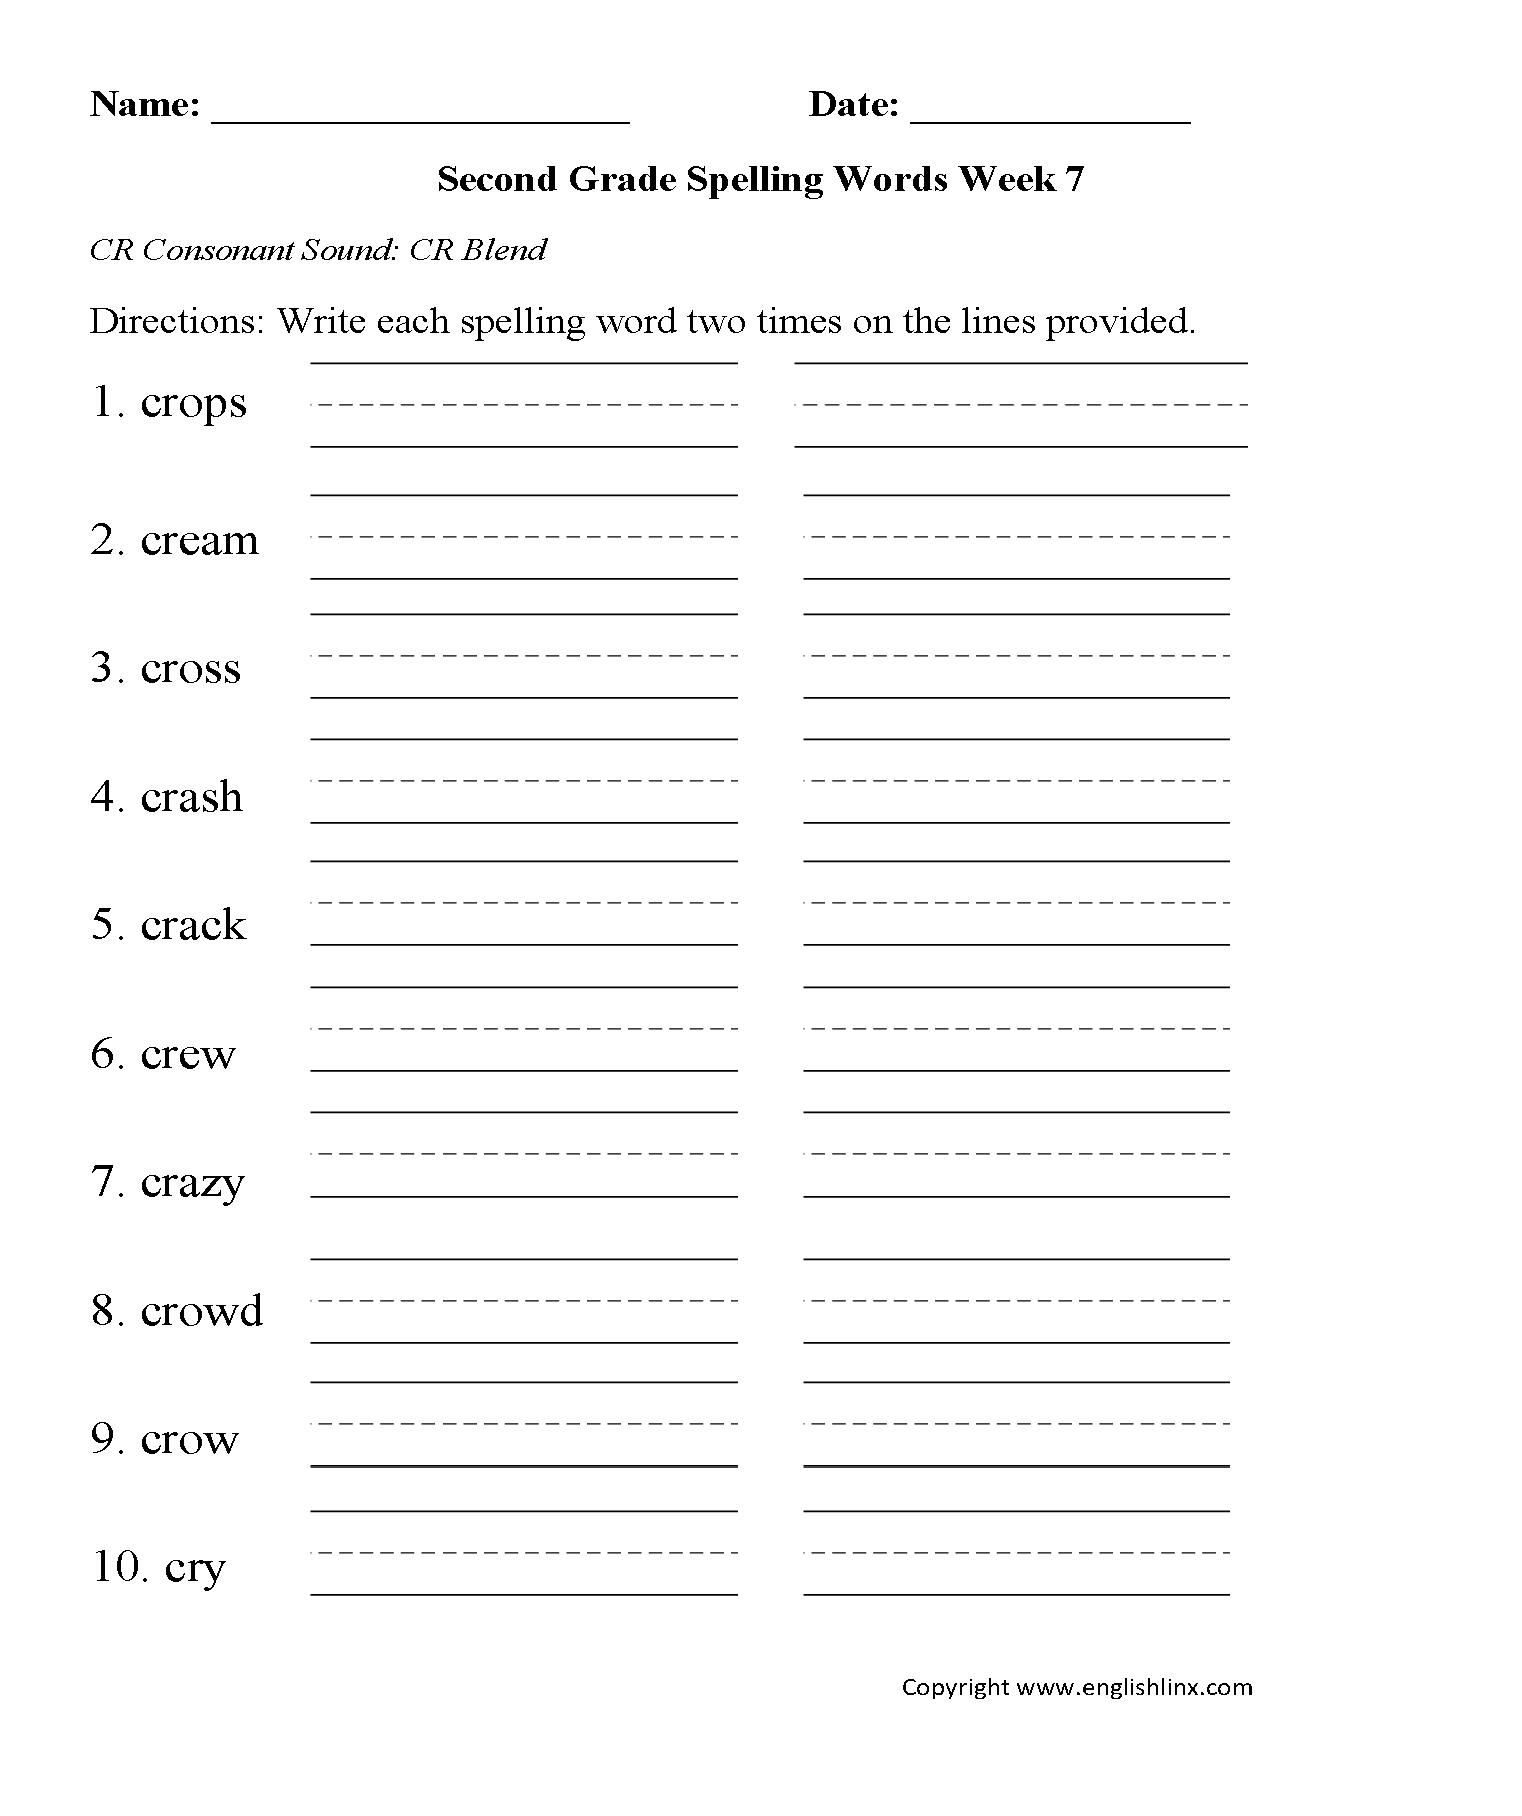 Spelling Worksheets | Second Grade Spelling Worksheets - Free Printable Spelling Worksheets